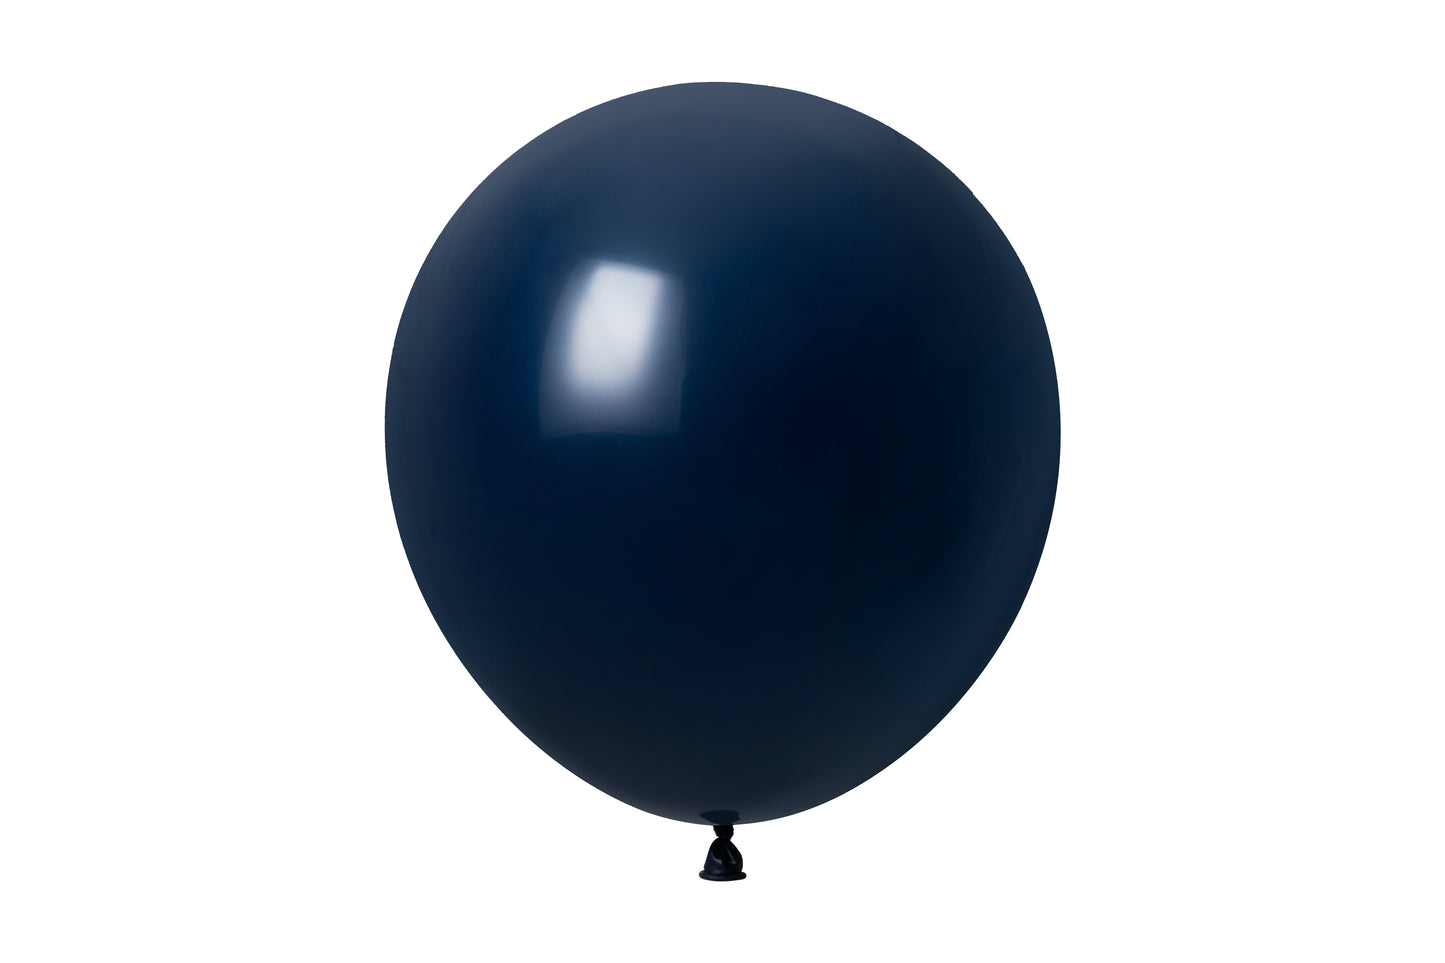 Winntex Premium 36" Latex Balloon - Navy Blue - 5ct